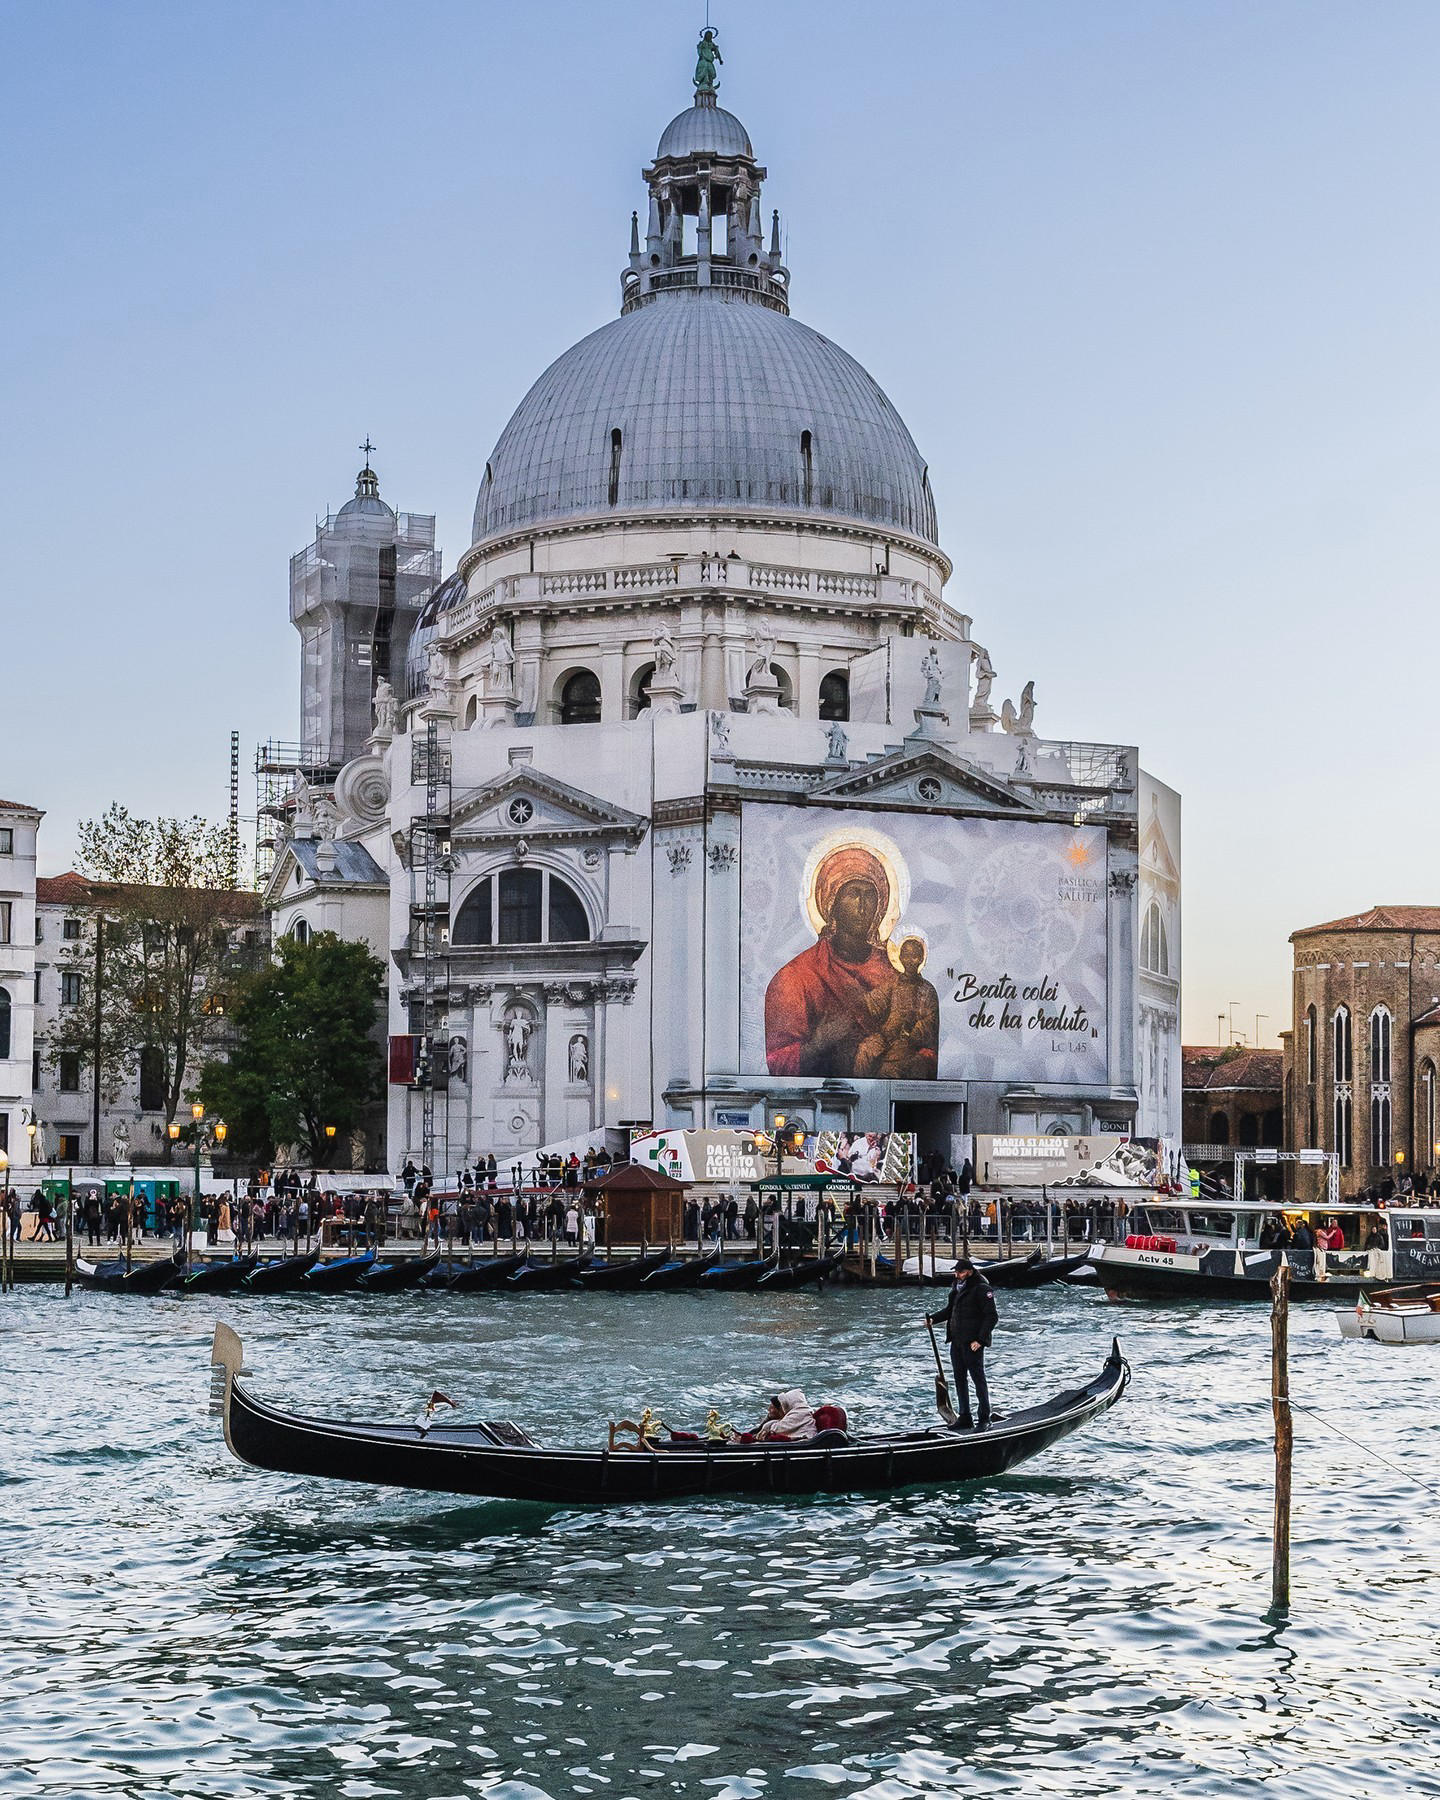 Hotel Excelsior Venice - On 21st November, the Madonna della Salute is celebrated in Venice